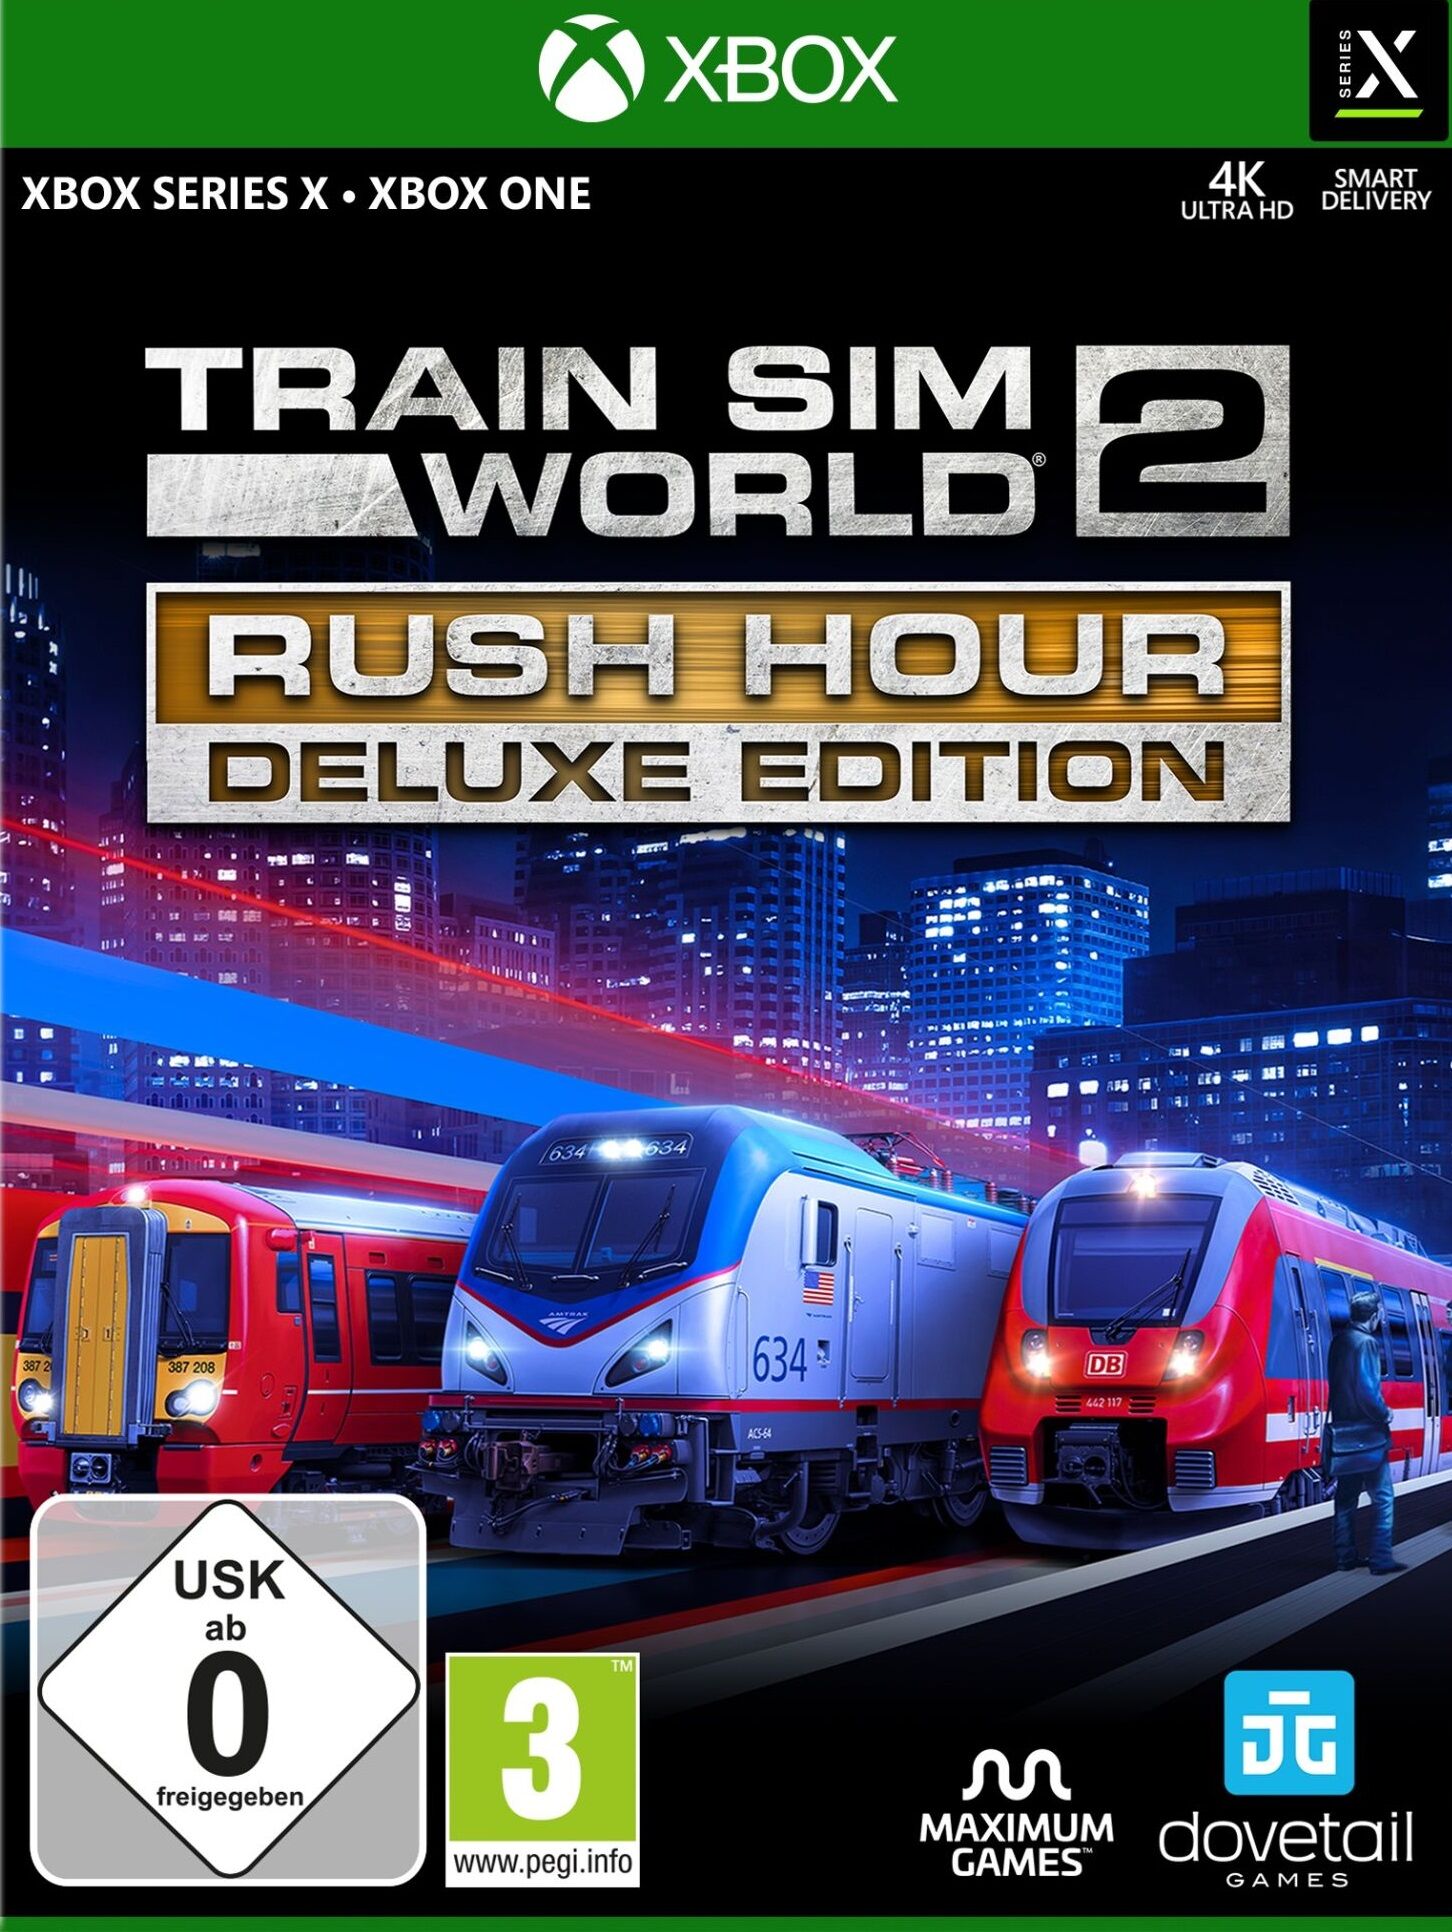 Maximum Games - Train Sim World 2: Rush Hour - Deluxe Edition [XSX] (D)